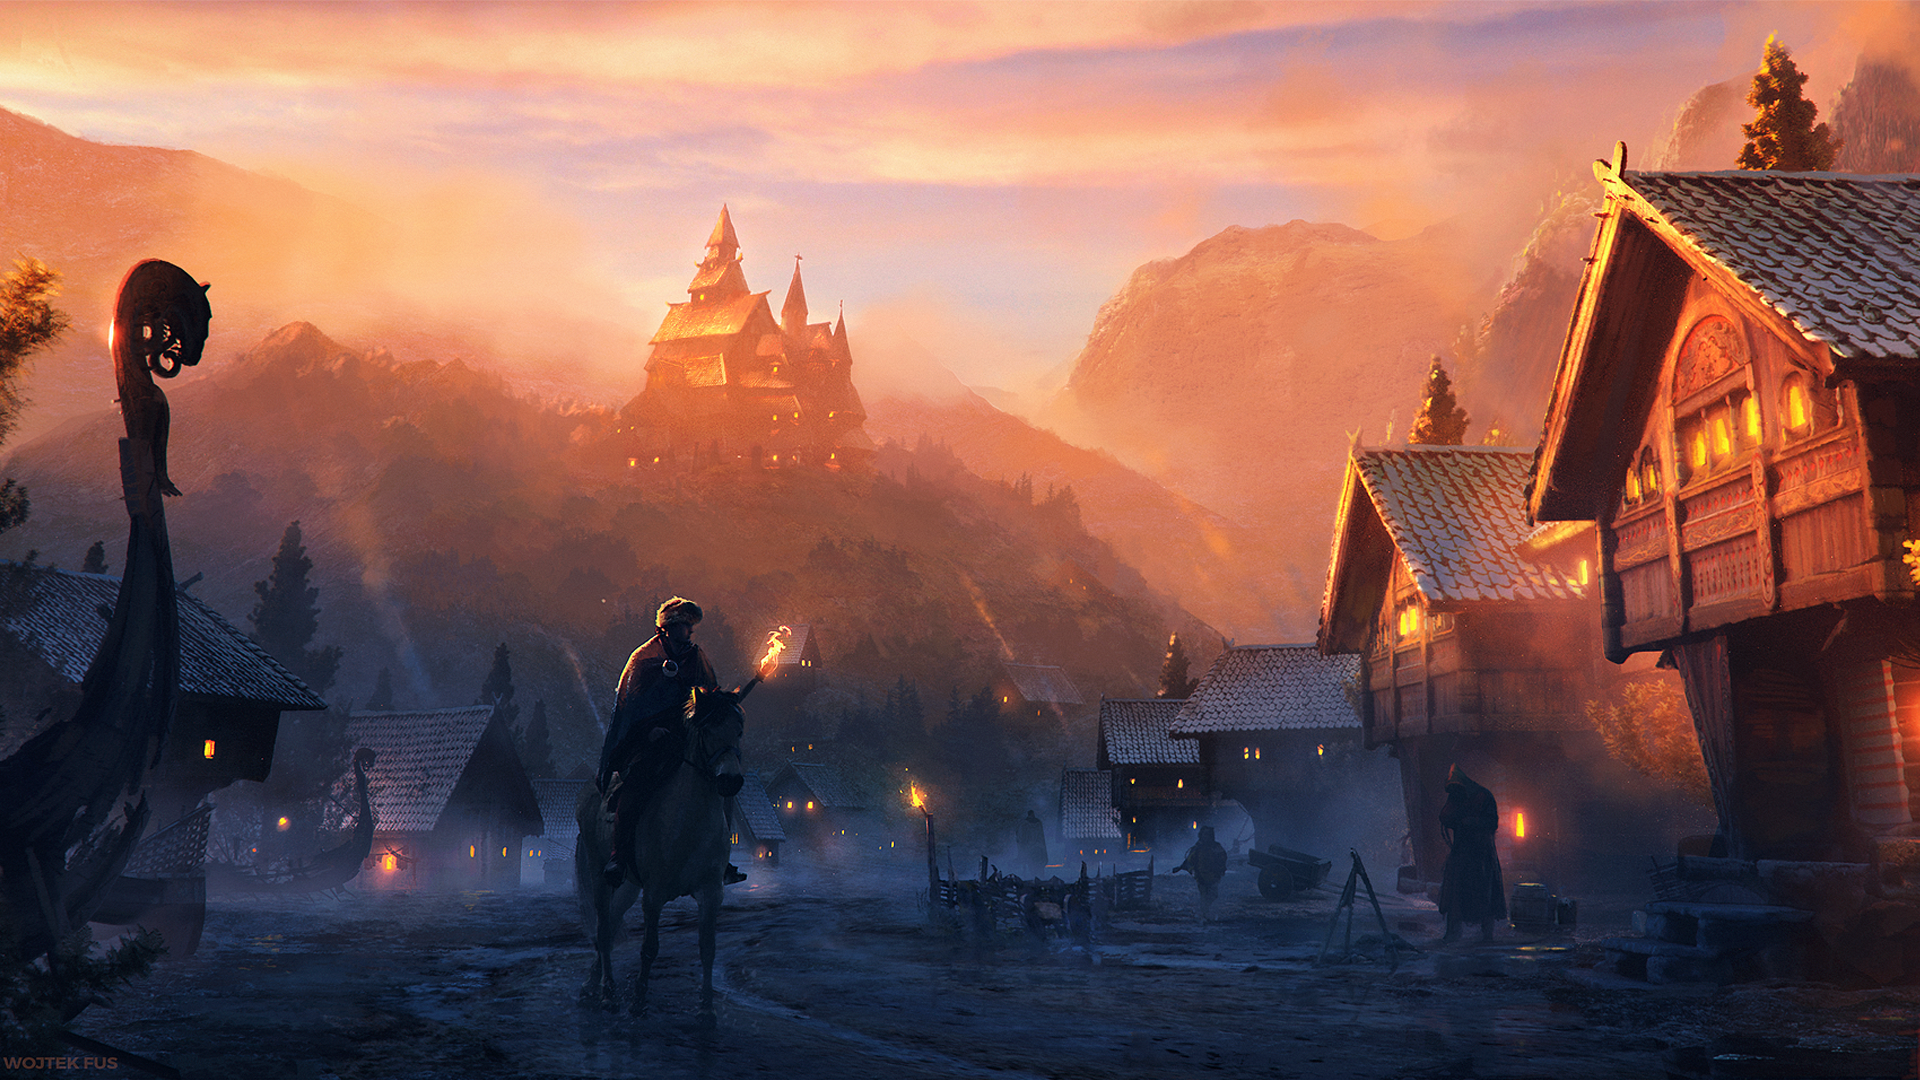 Digital Art Artwork Medieval Village Fantasy City Fantasy Art Mountains Sunset Castle Wojtek Fus 1920x1080